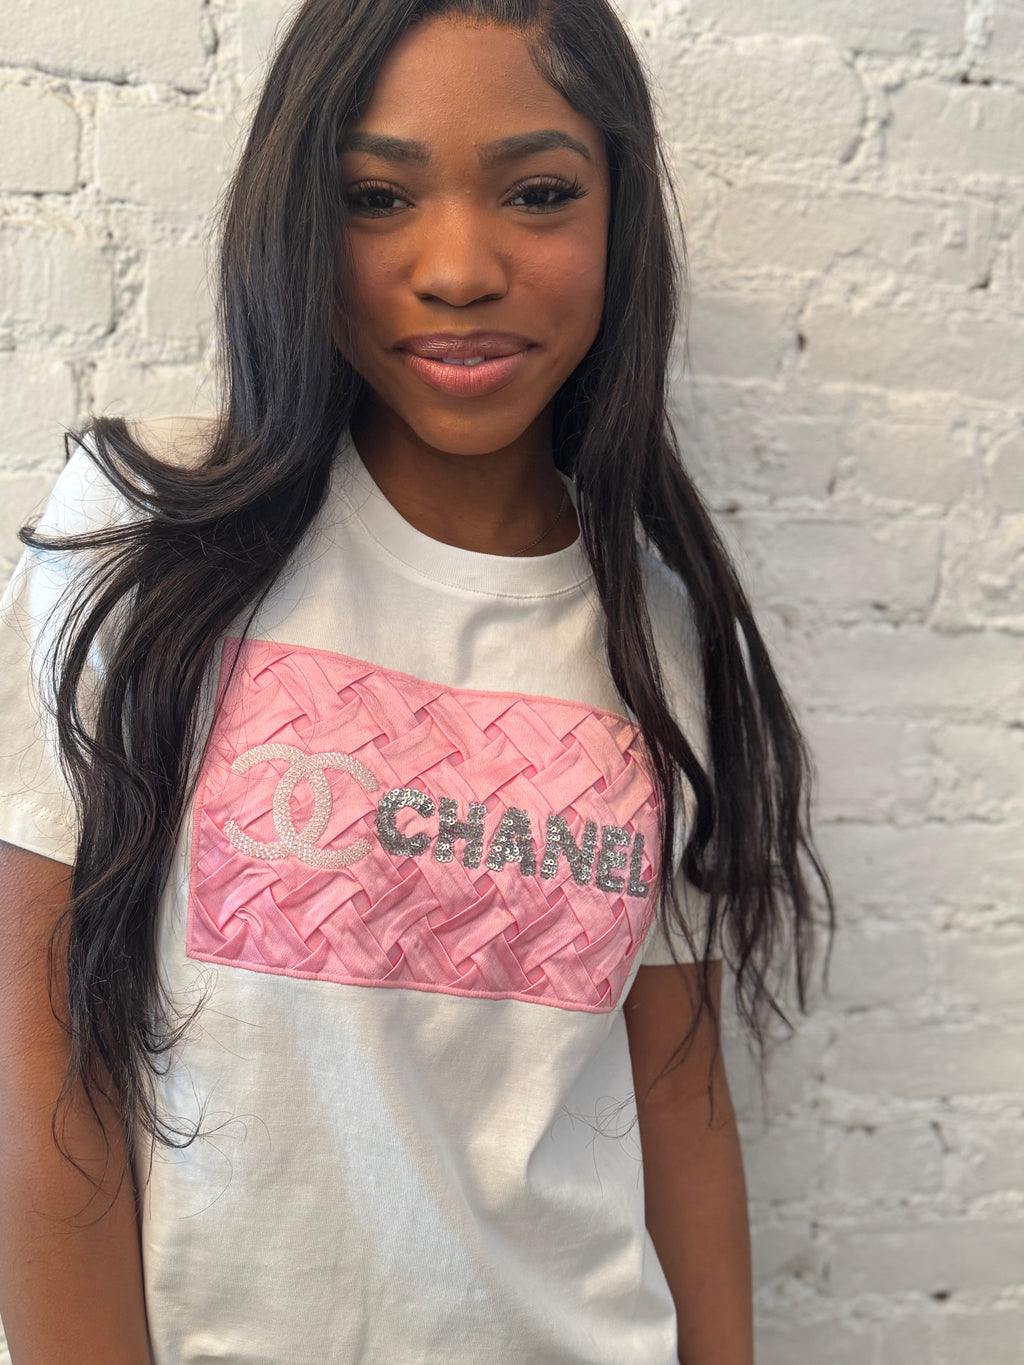 Novelty CC Chanel inspired Tee shirt